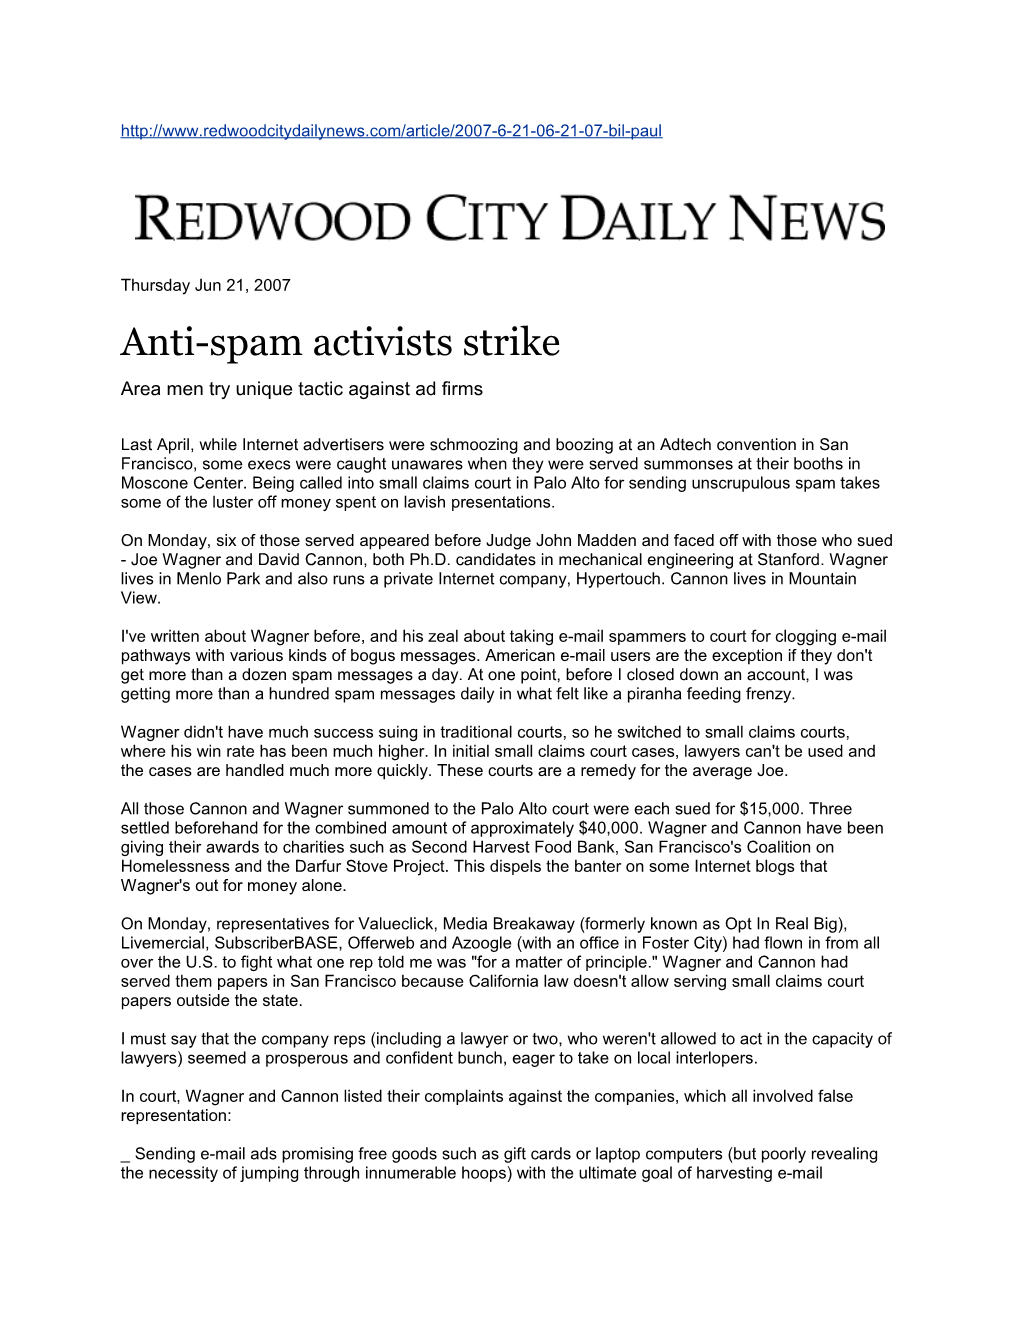 Anti-Spam Activists Strike - Redwood City Daily News